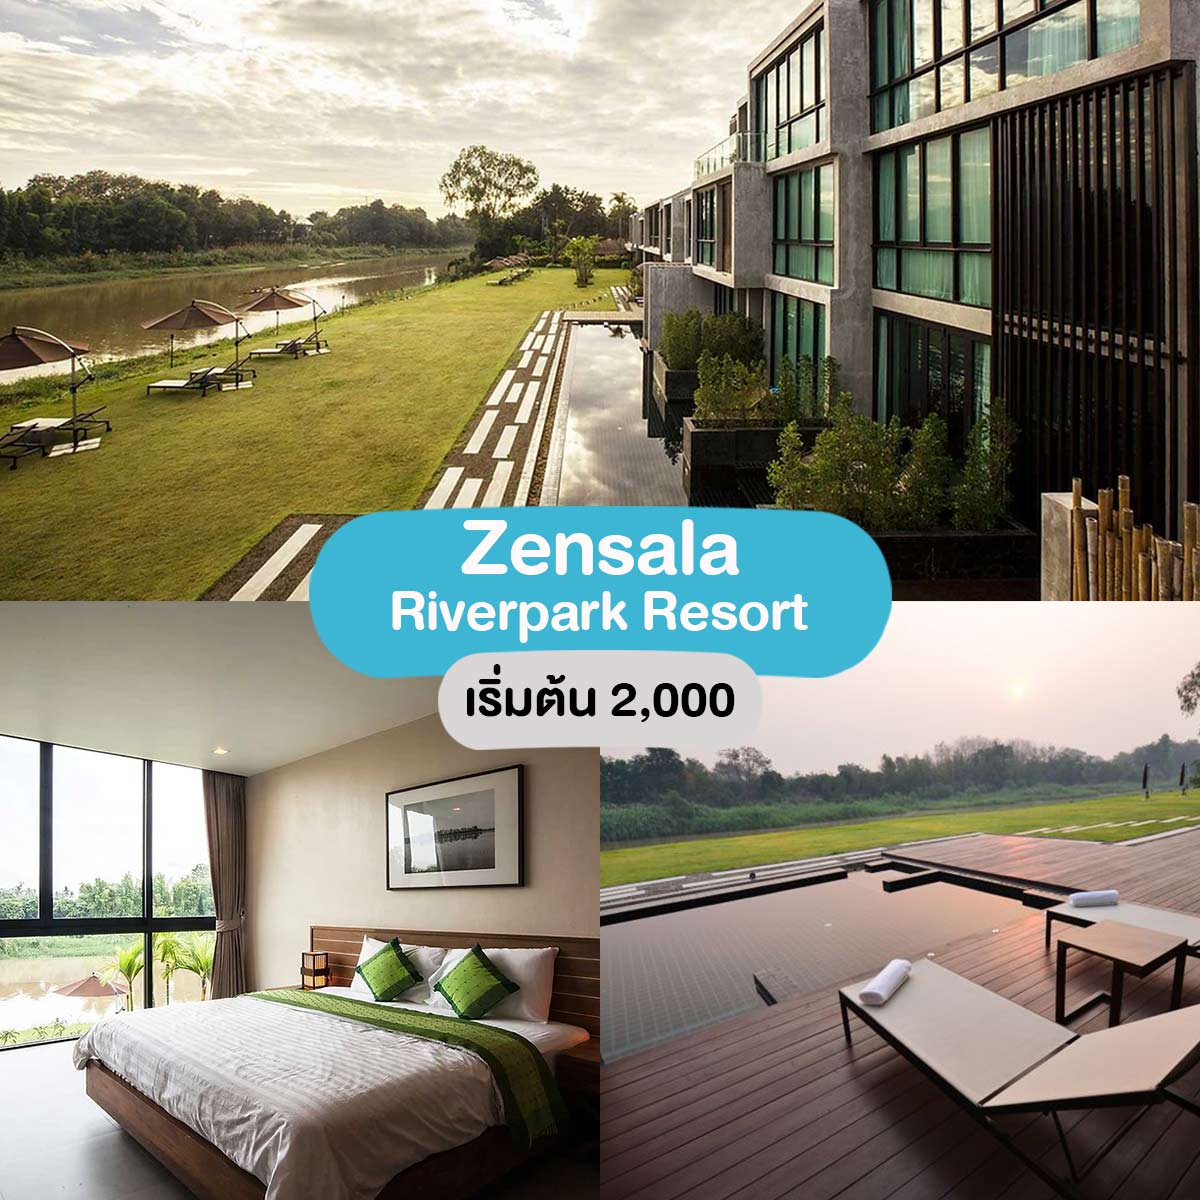 Zensala Riverpark Resort